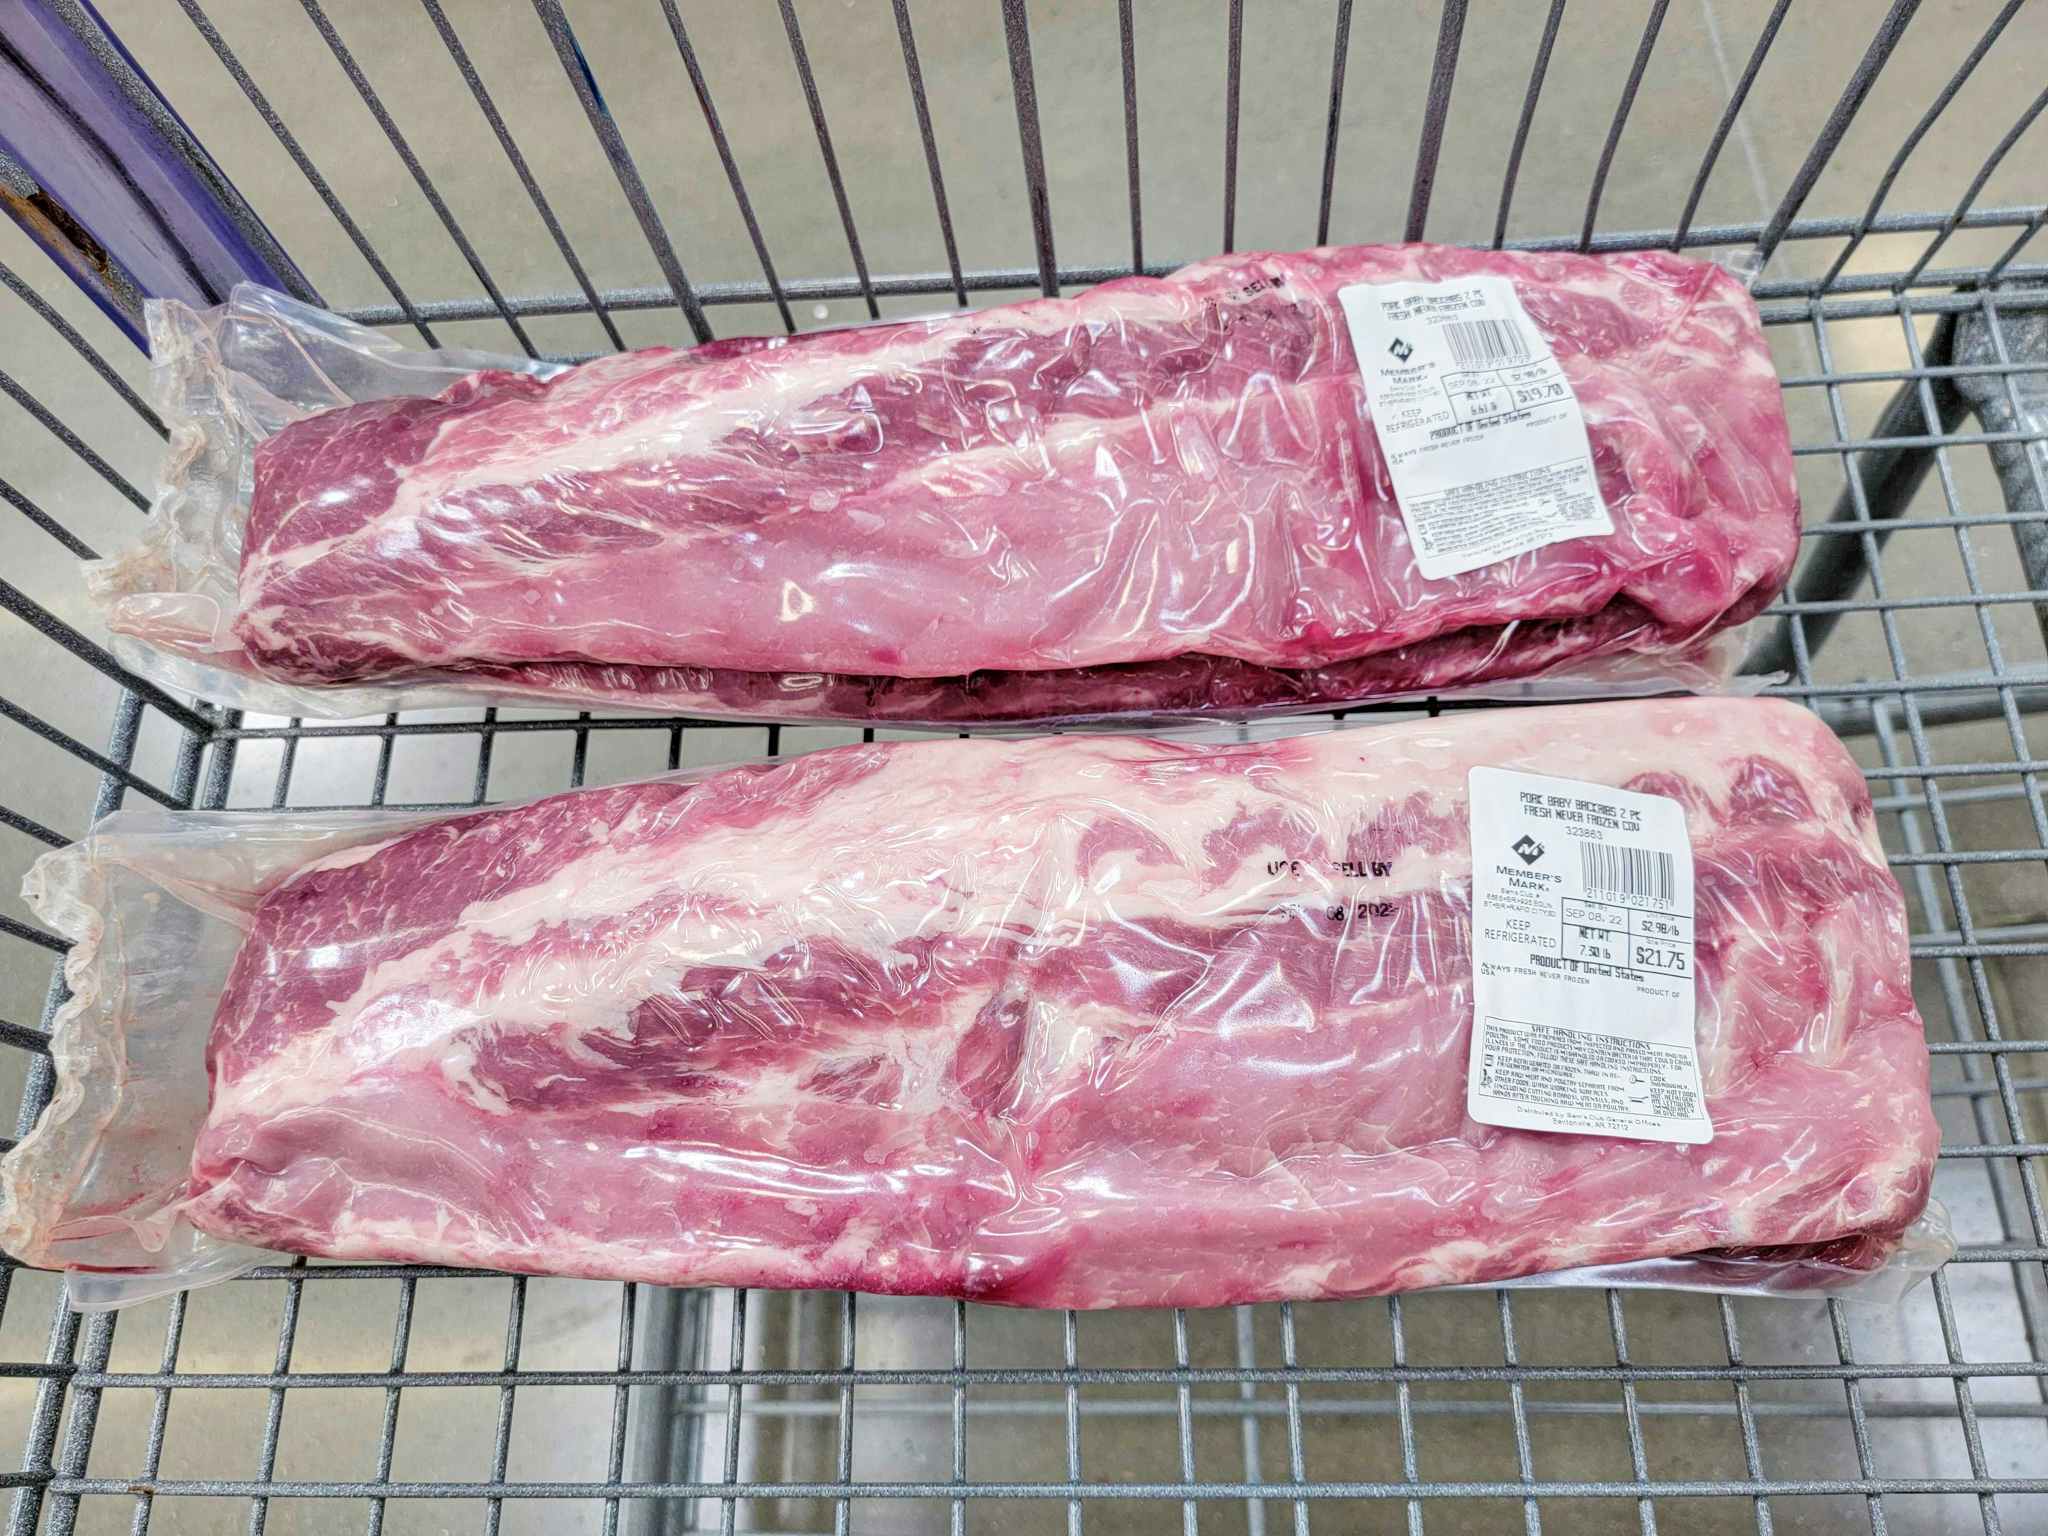 2 packs of pork ribs in a cart